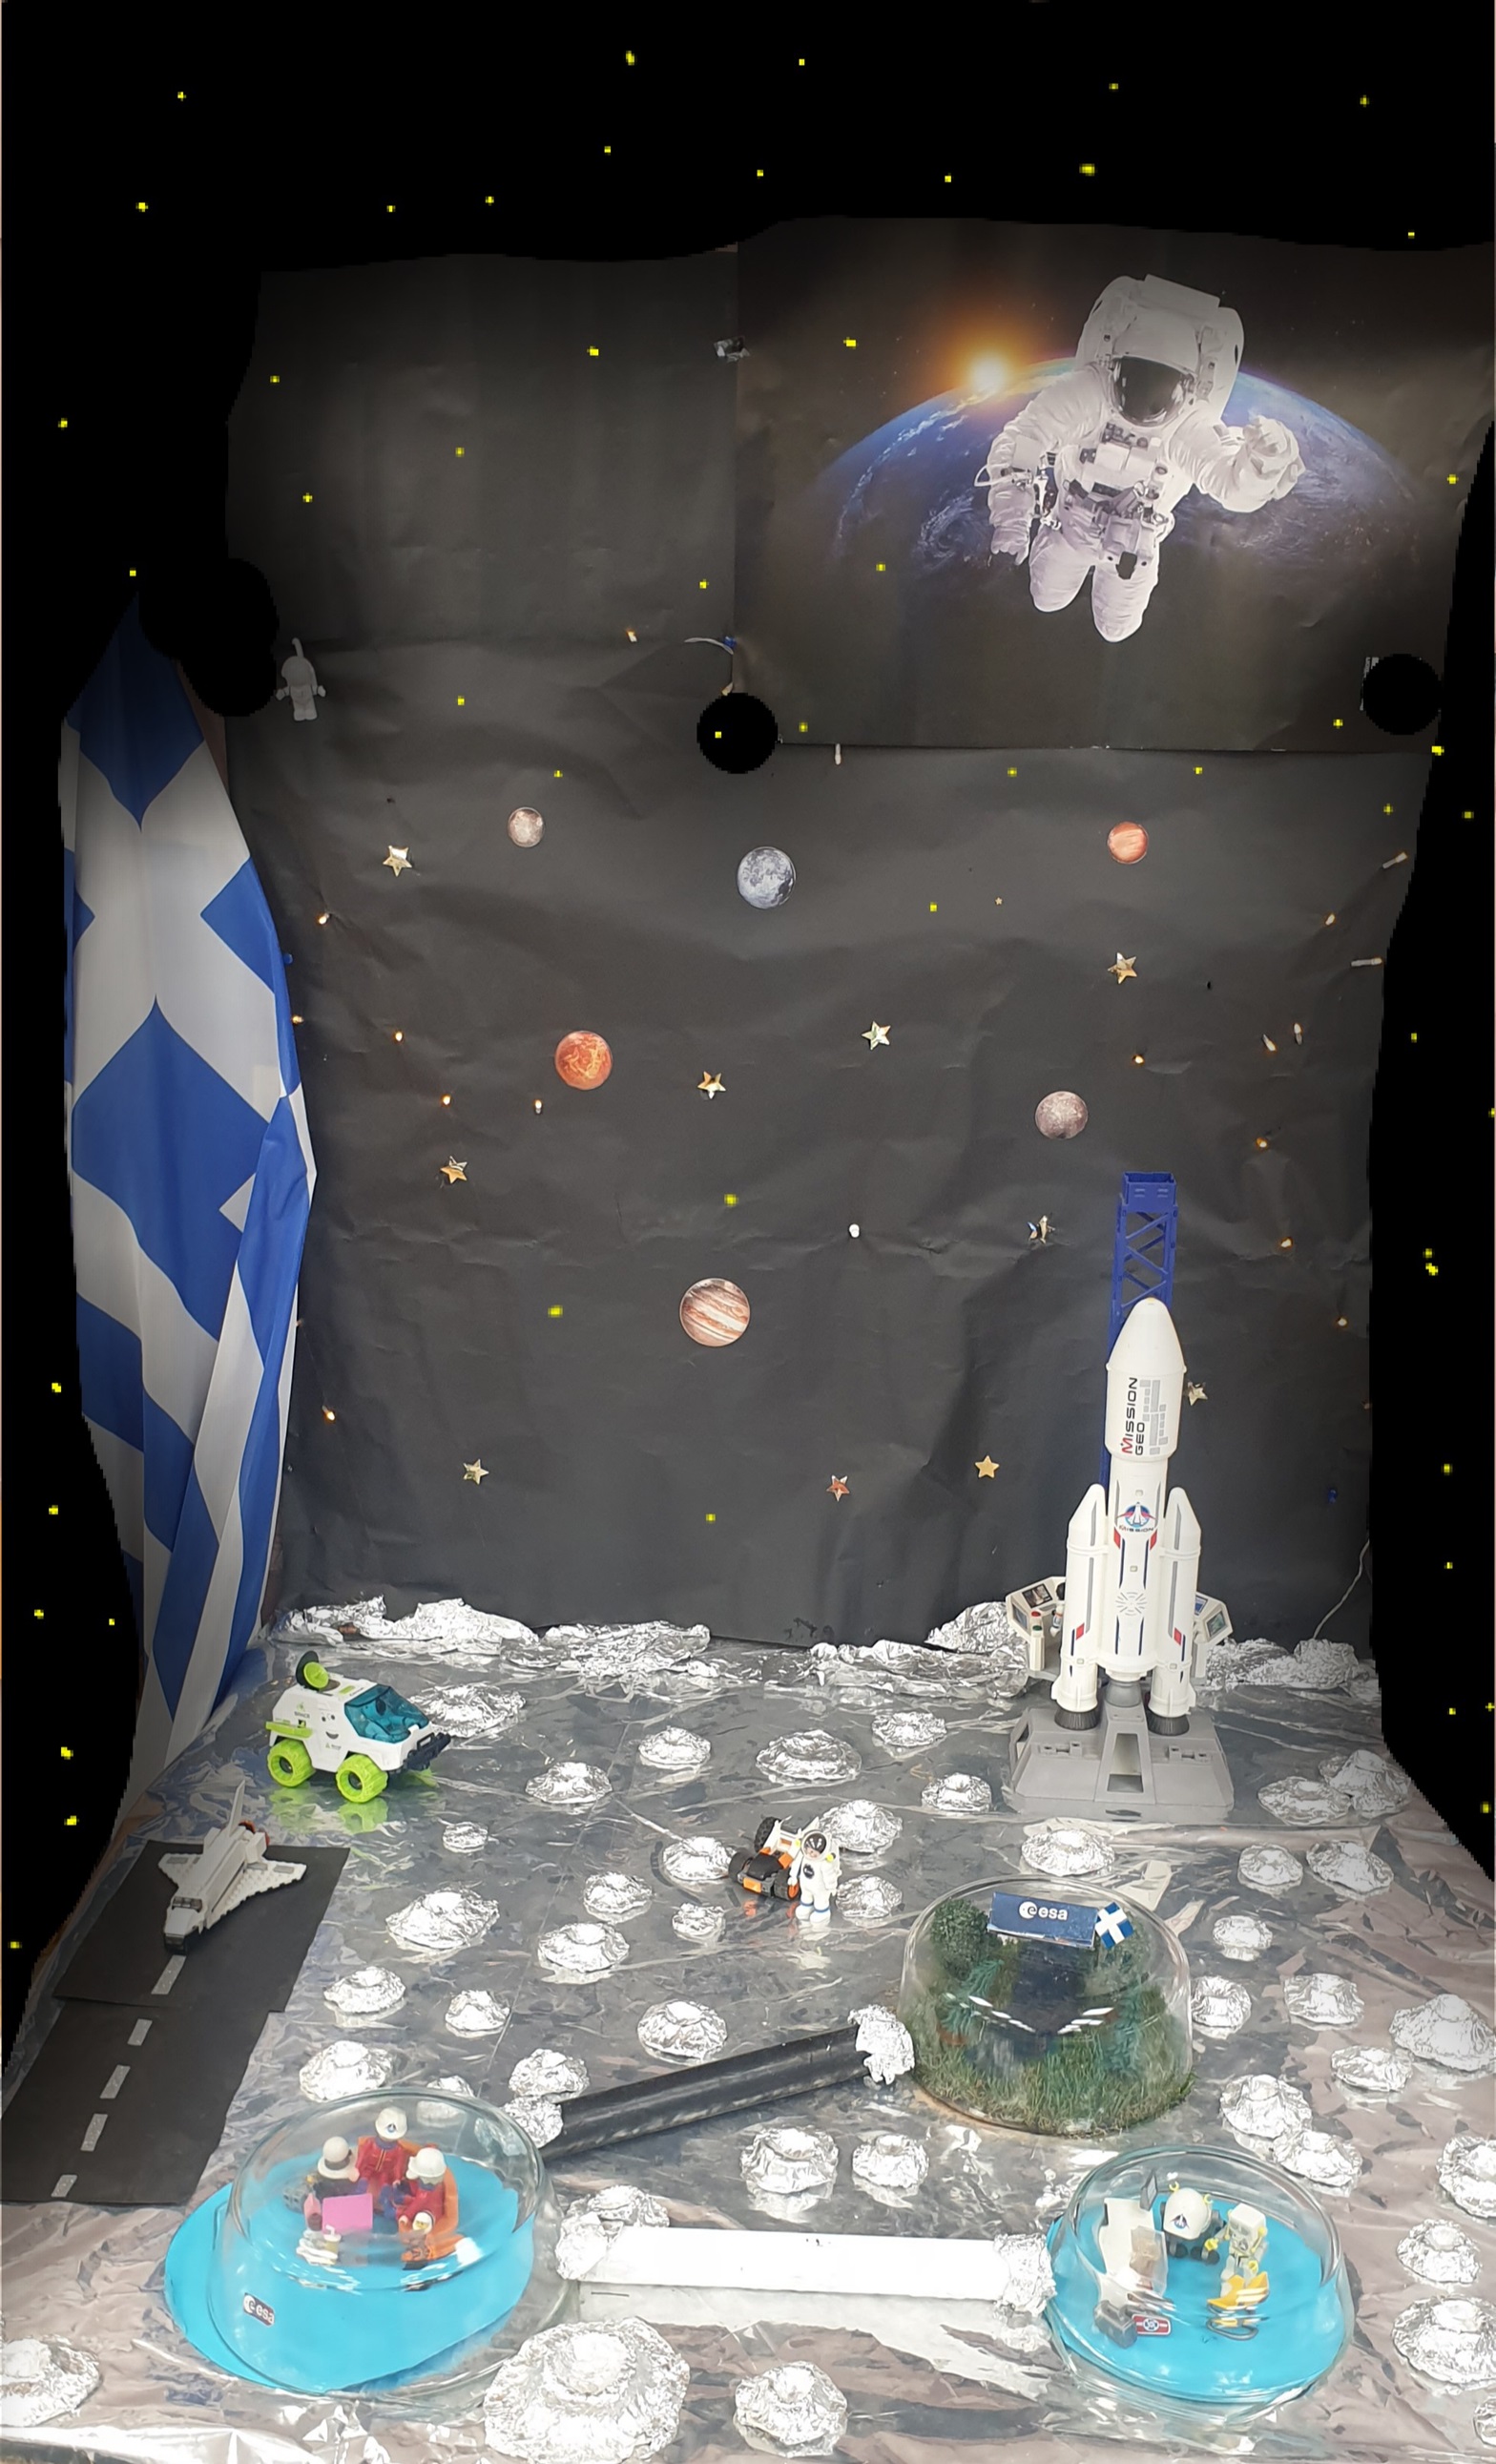 The Greek Moon Camp ST2 YHTTOS HELLAS